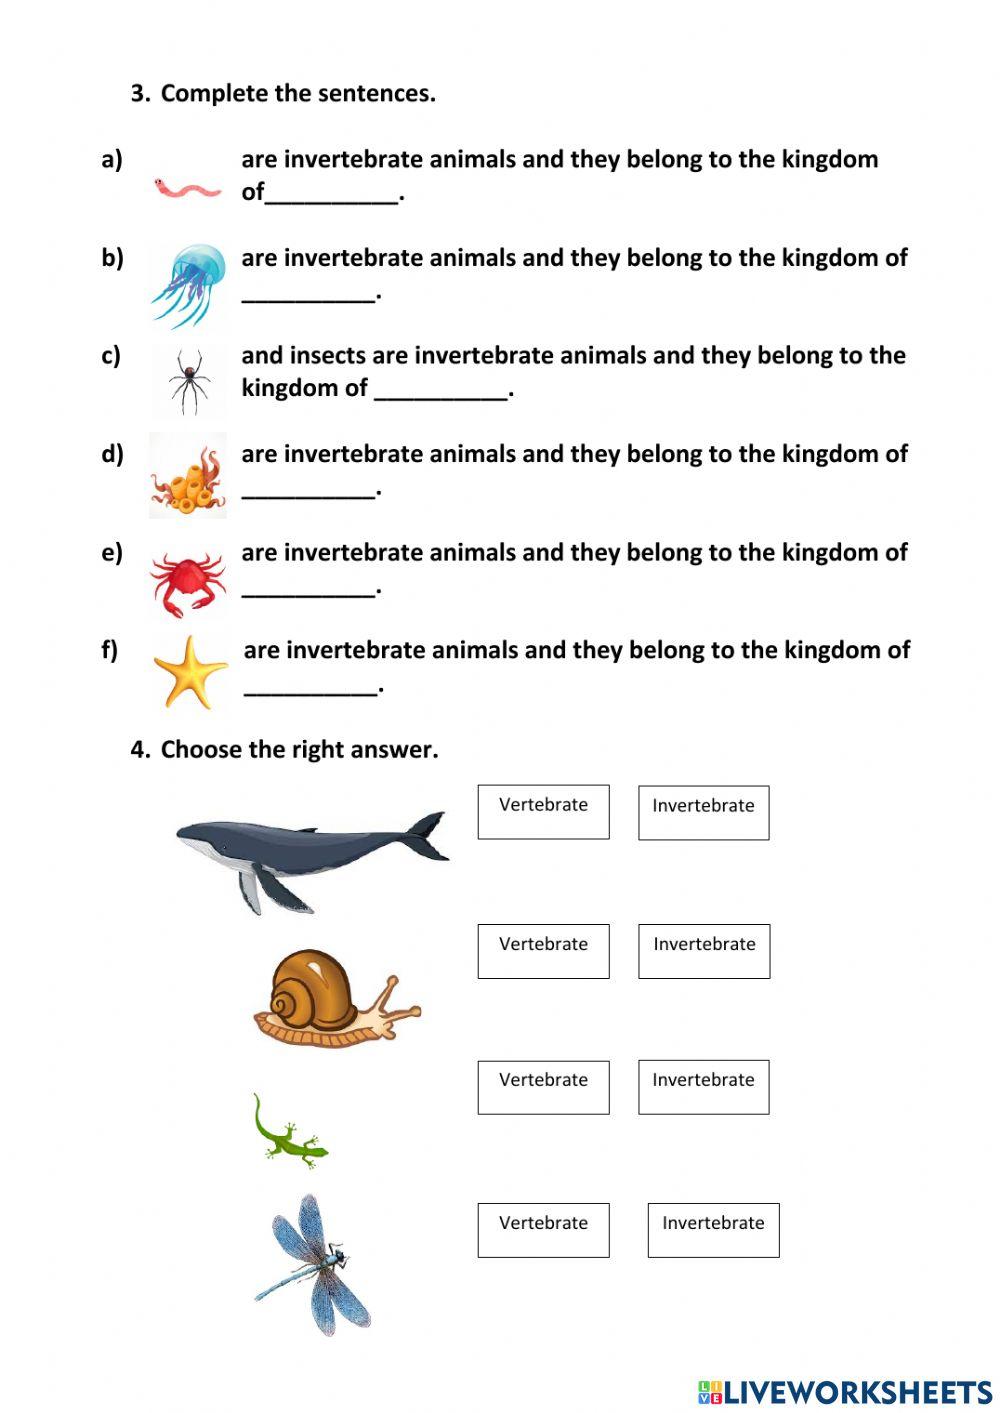 Vertebrate and Invertebrate animals